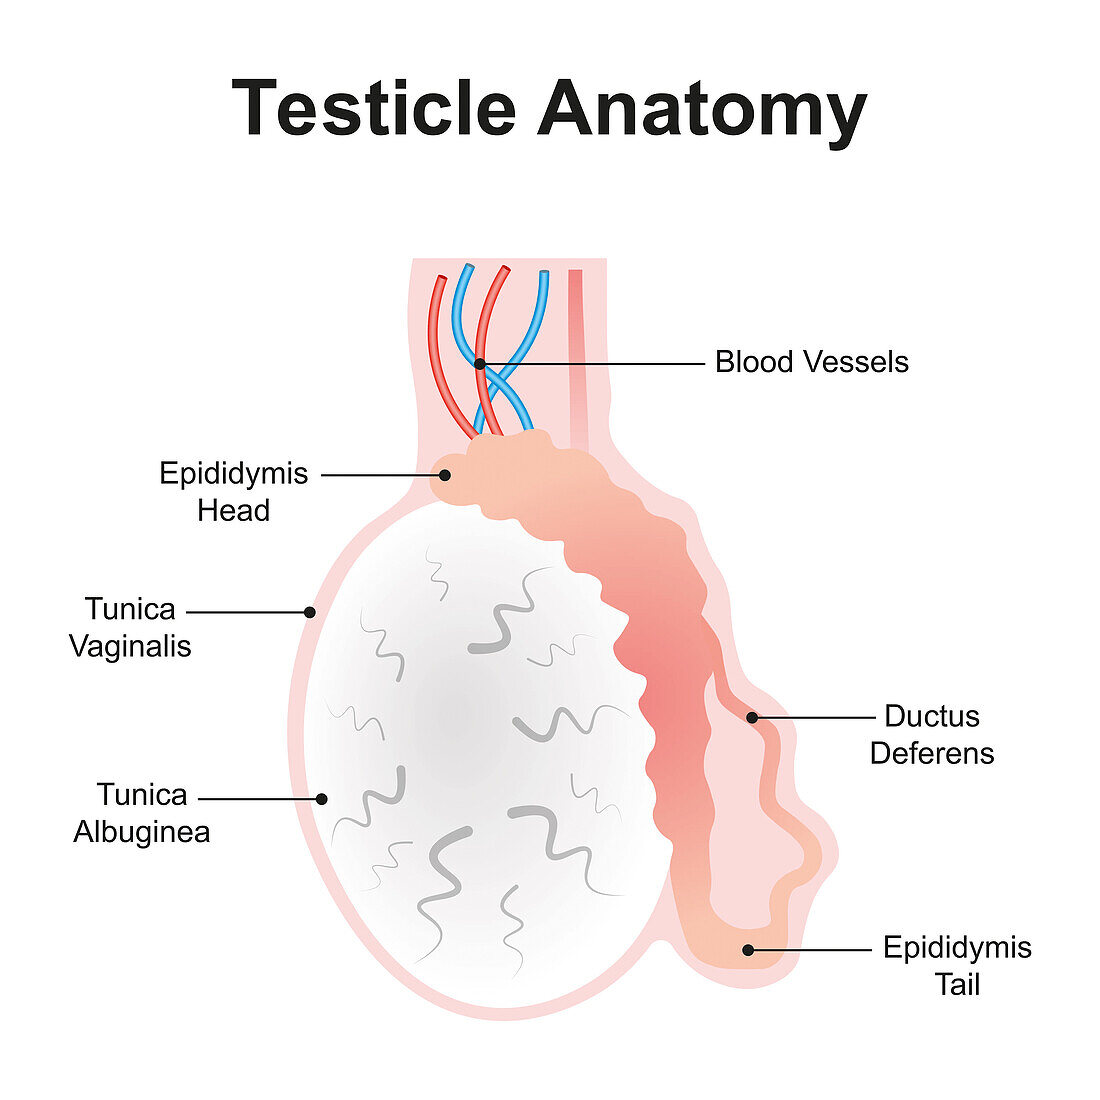 Testicle anatomy, illustration